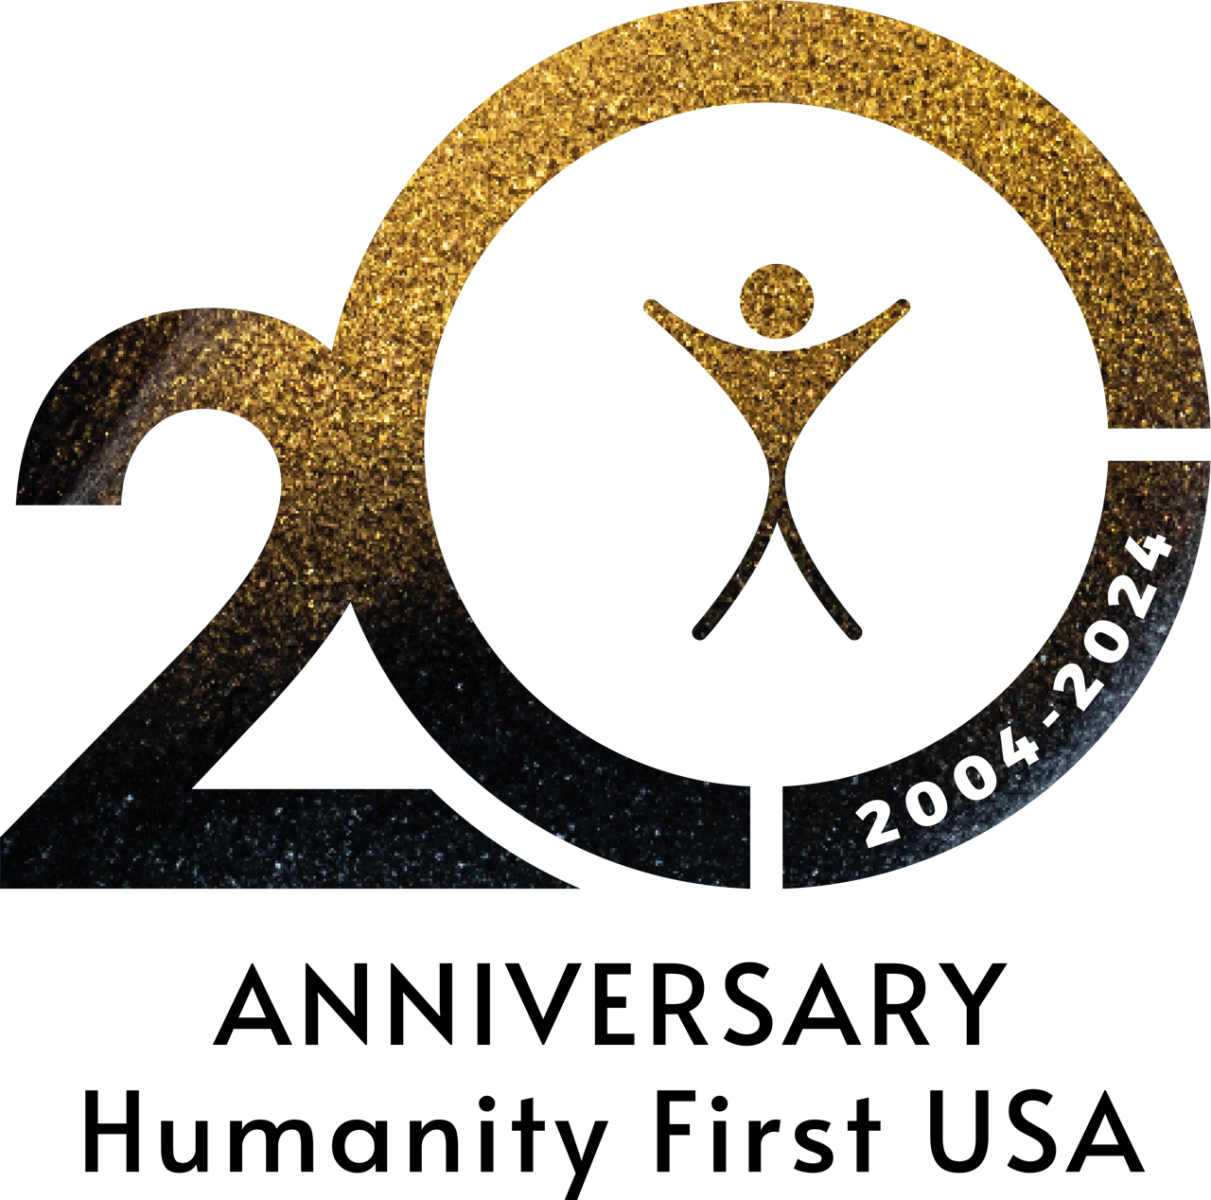 HFUSA 20 Anniversary Logo Large